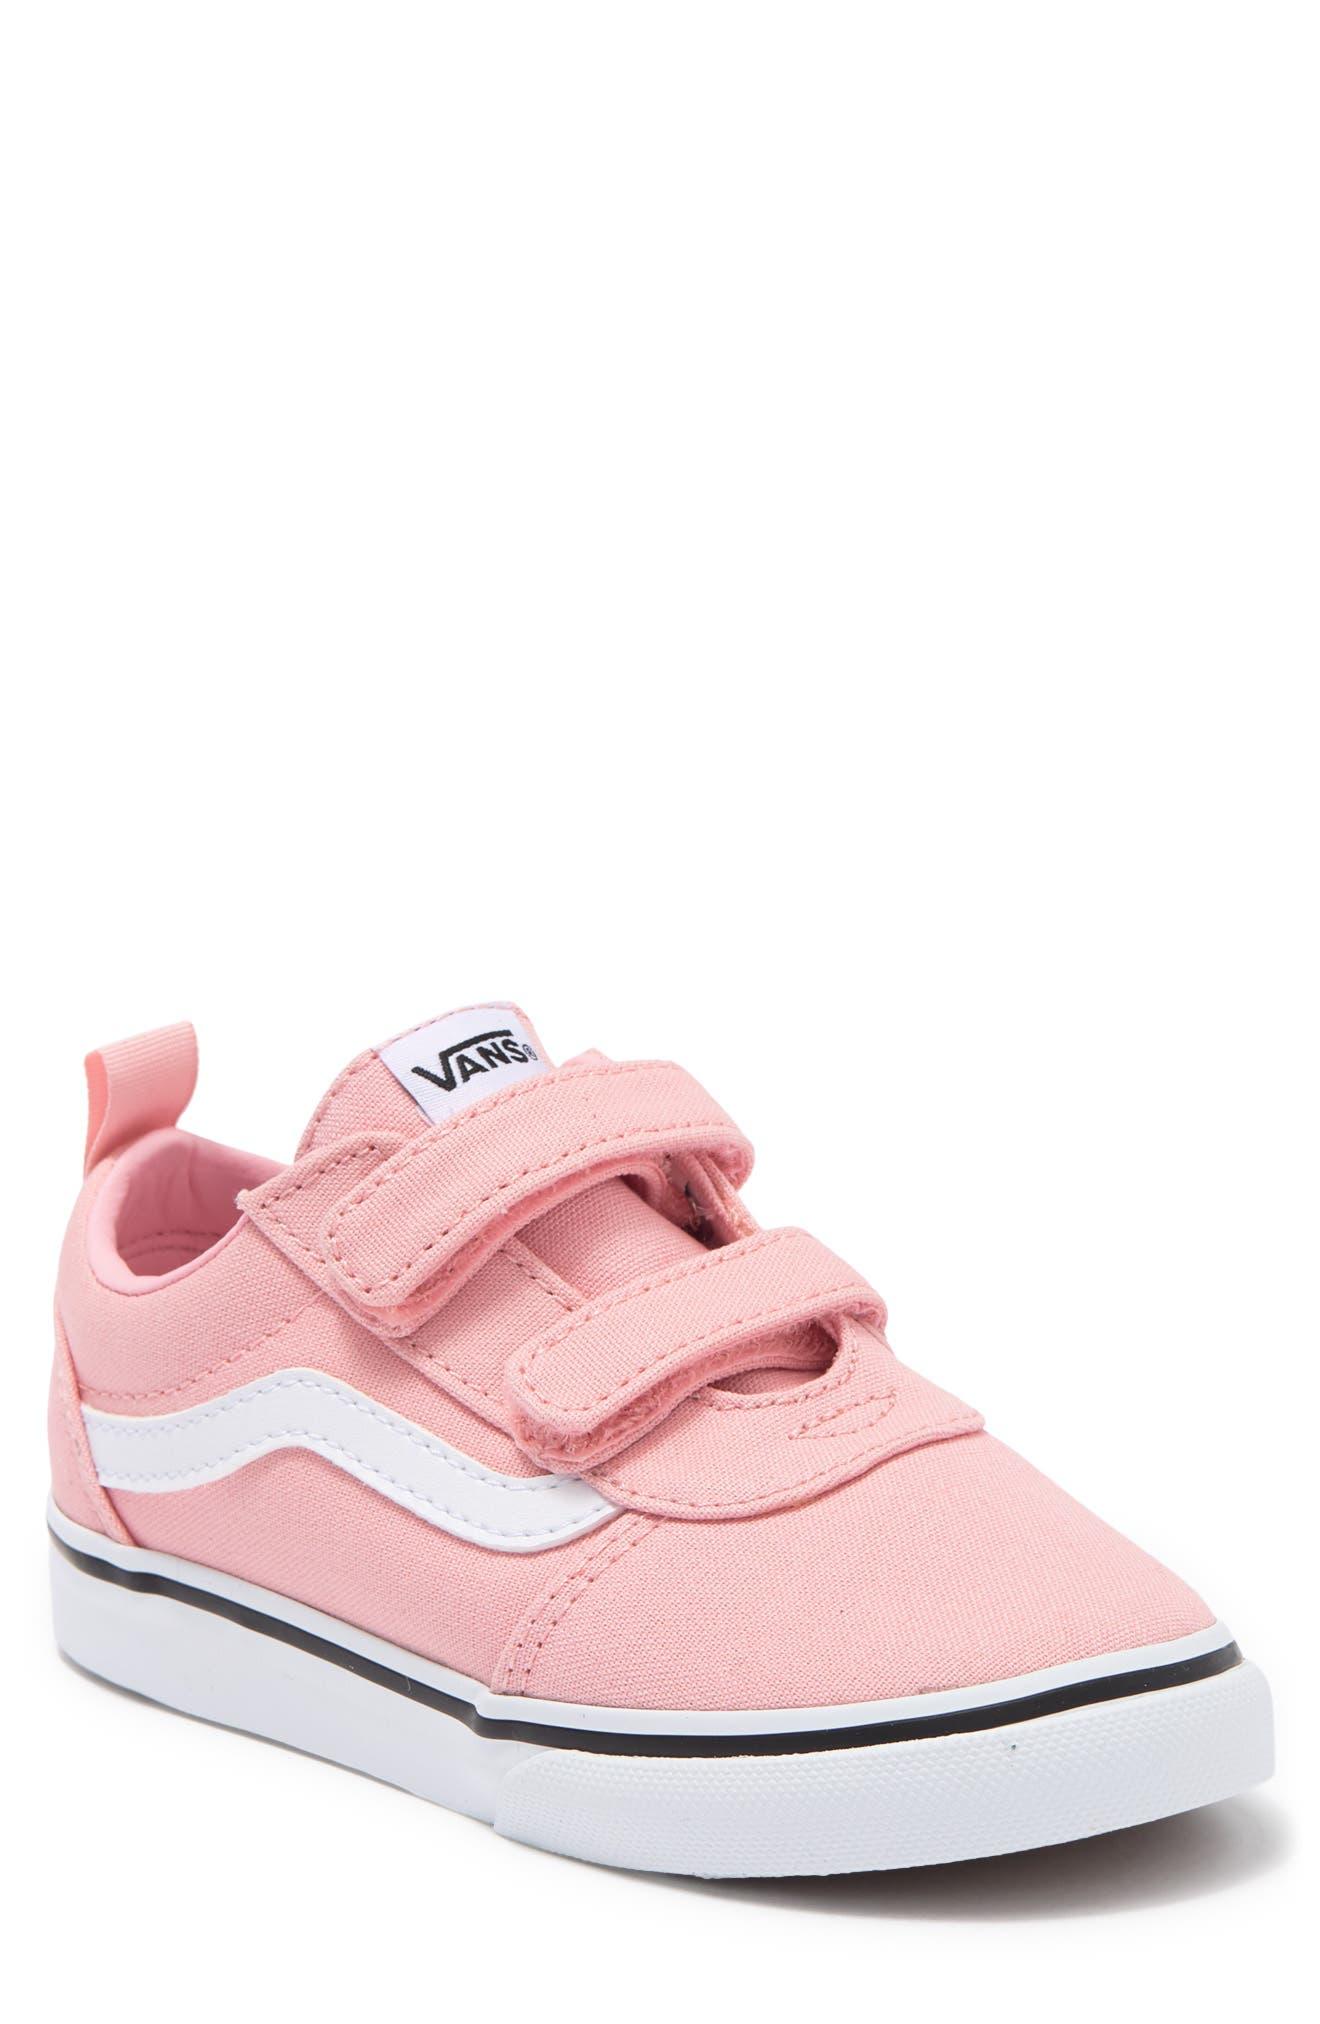 Vans Ward Sneaker in Pink | Lyst